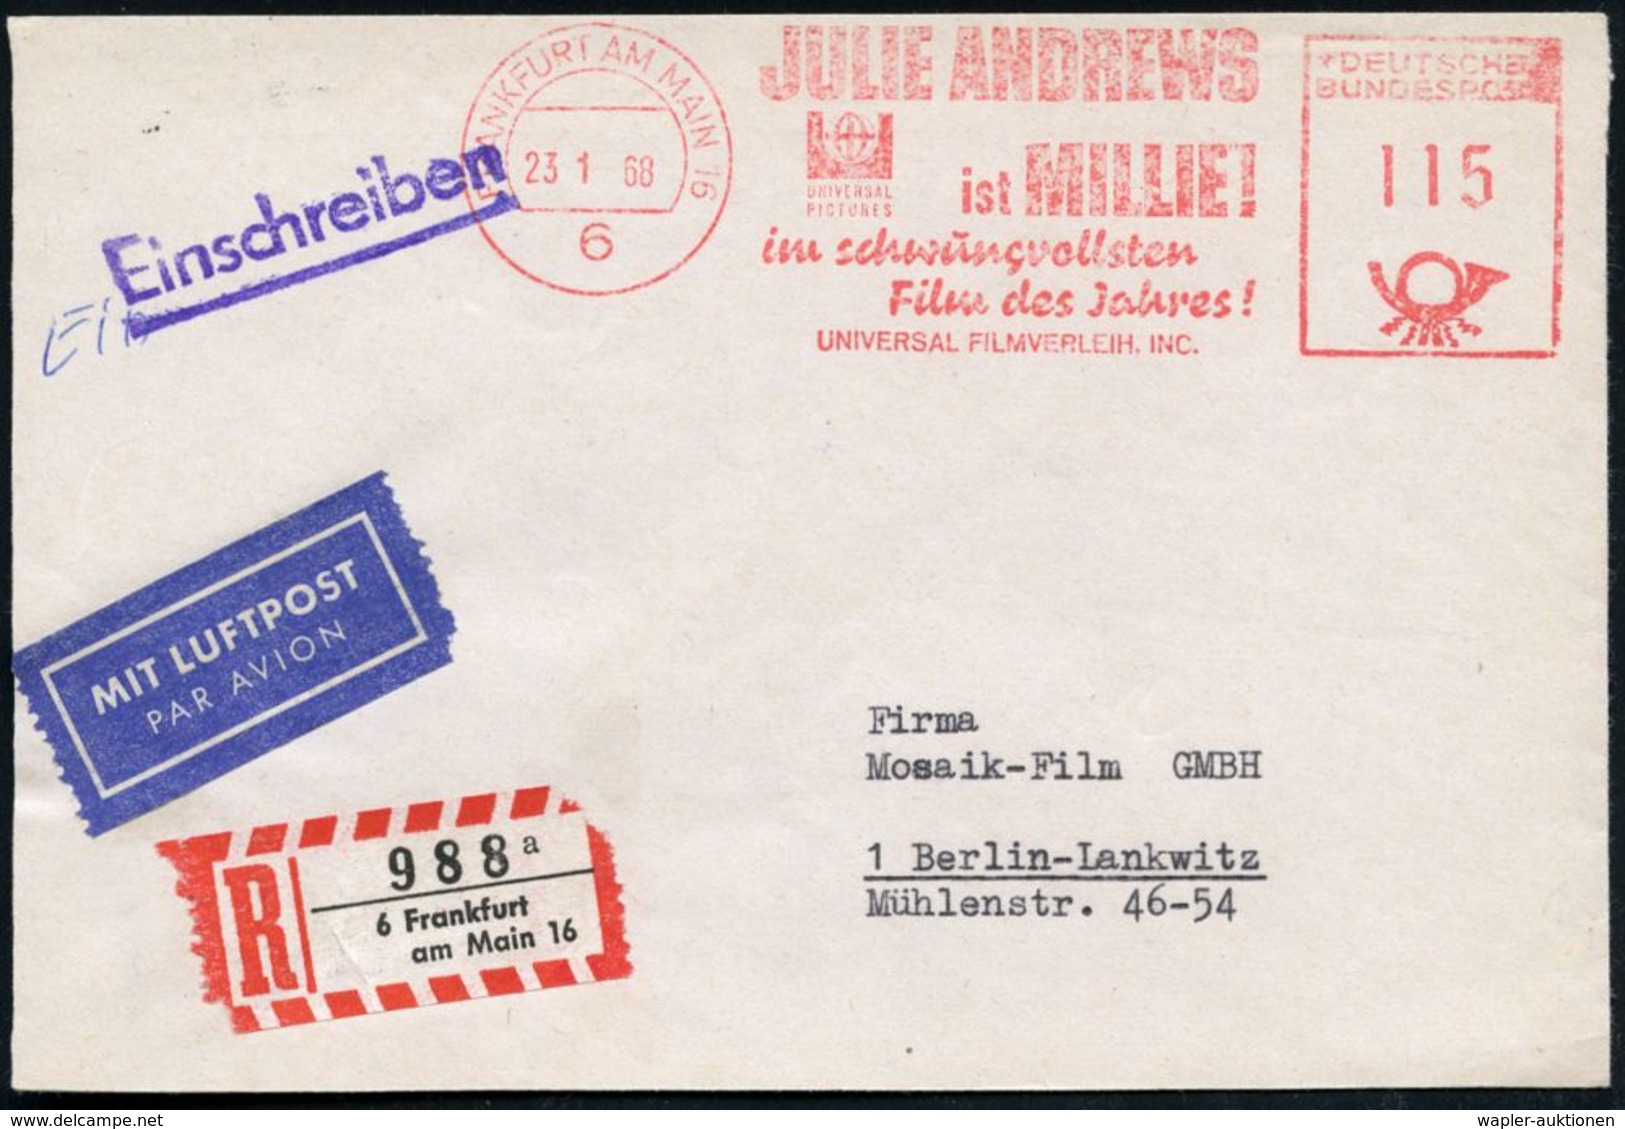 6 FRANKFURT AM MAIN 16/ JULIE ANDREWS/ Ist MILLIE!/ ..UNIVERSAL FILMVERLEIH INC. 1968 (23.1.) AFS 115 Pf. + RZ: 6 Frankf - Cinema